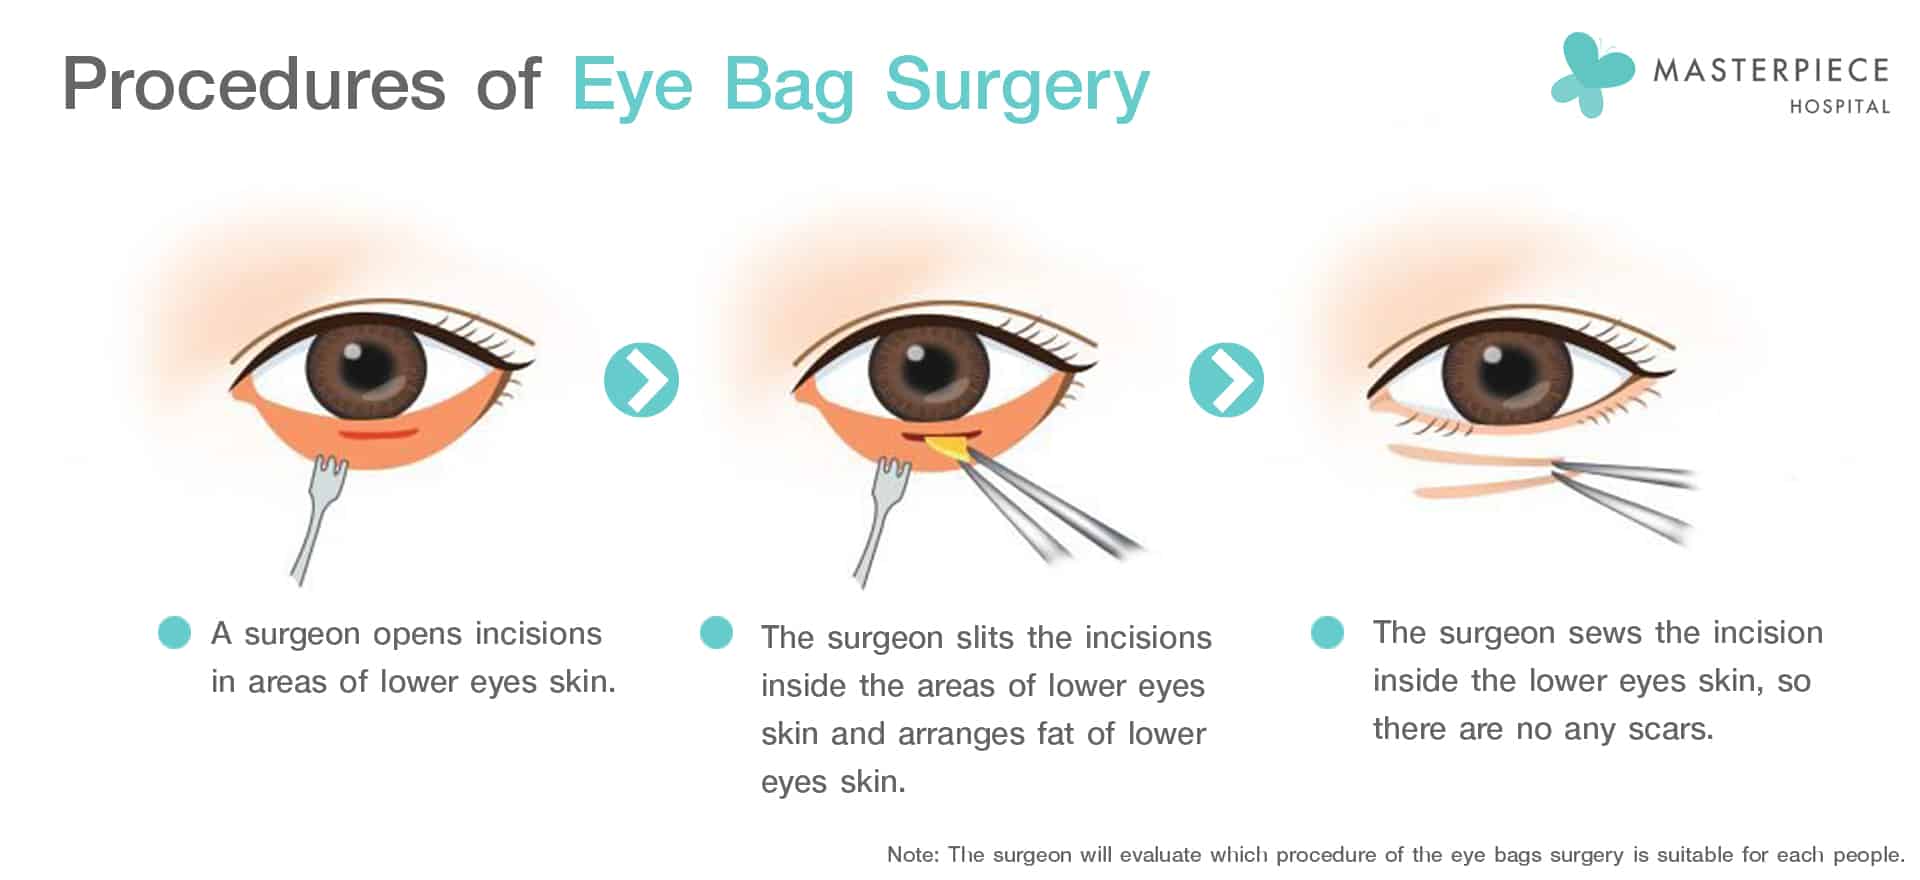 Procedures of Eye Bag Surgery